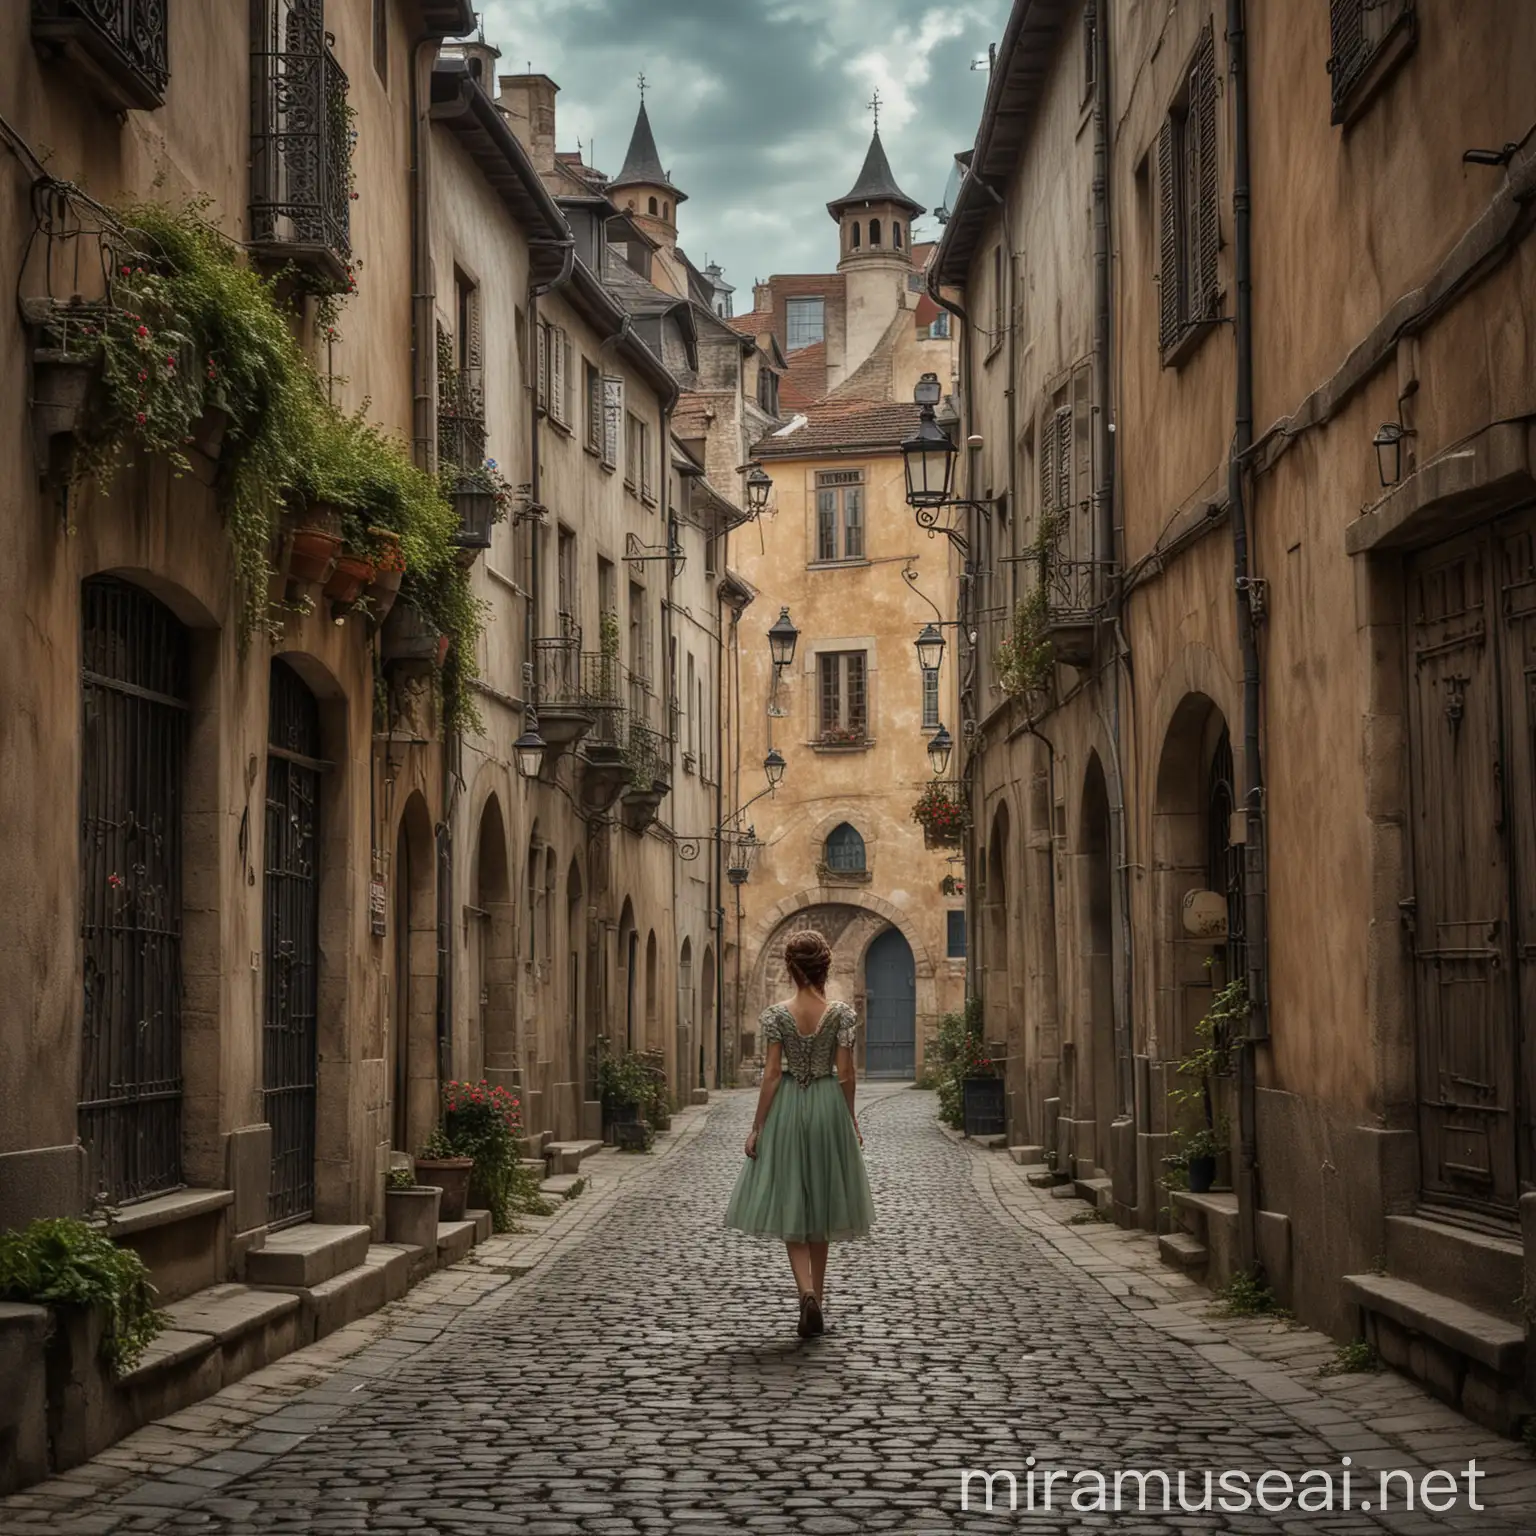 European Fairy Tale Street Scene Embracing Freedom